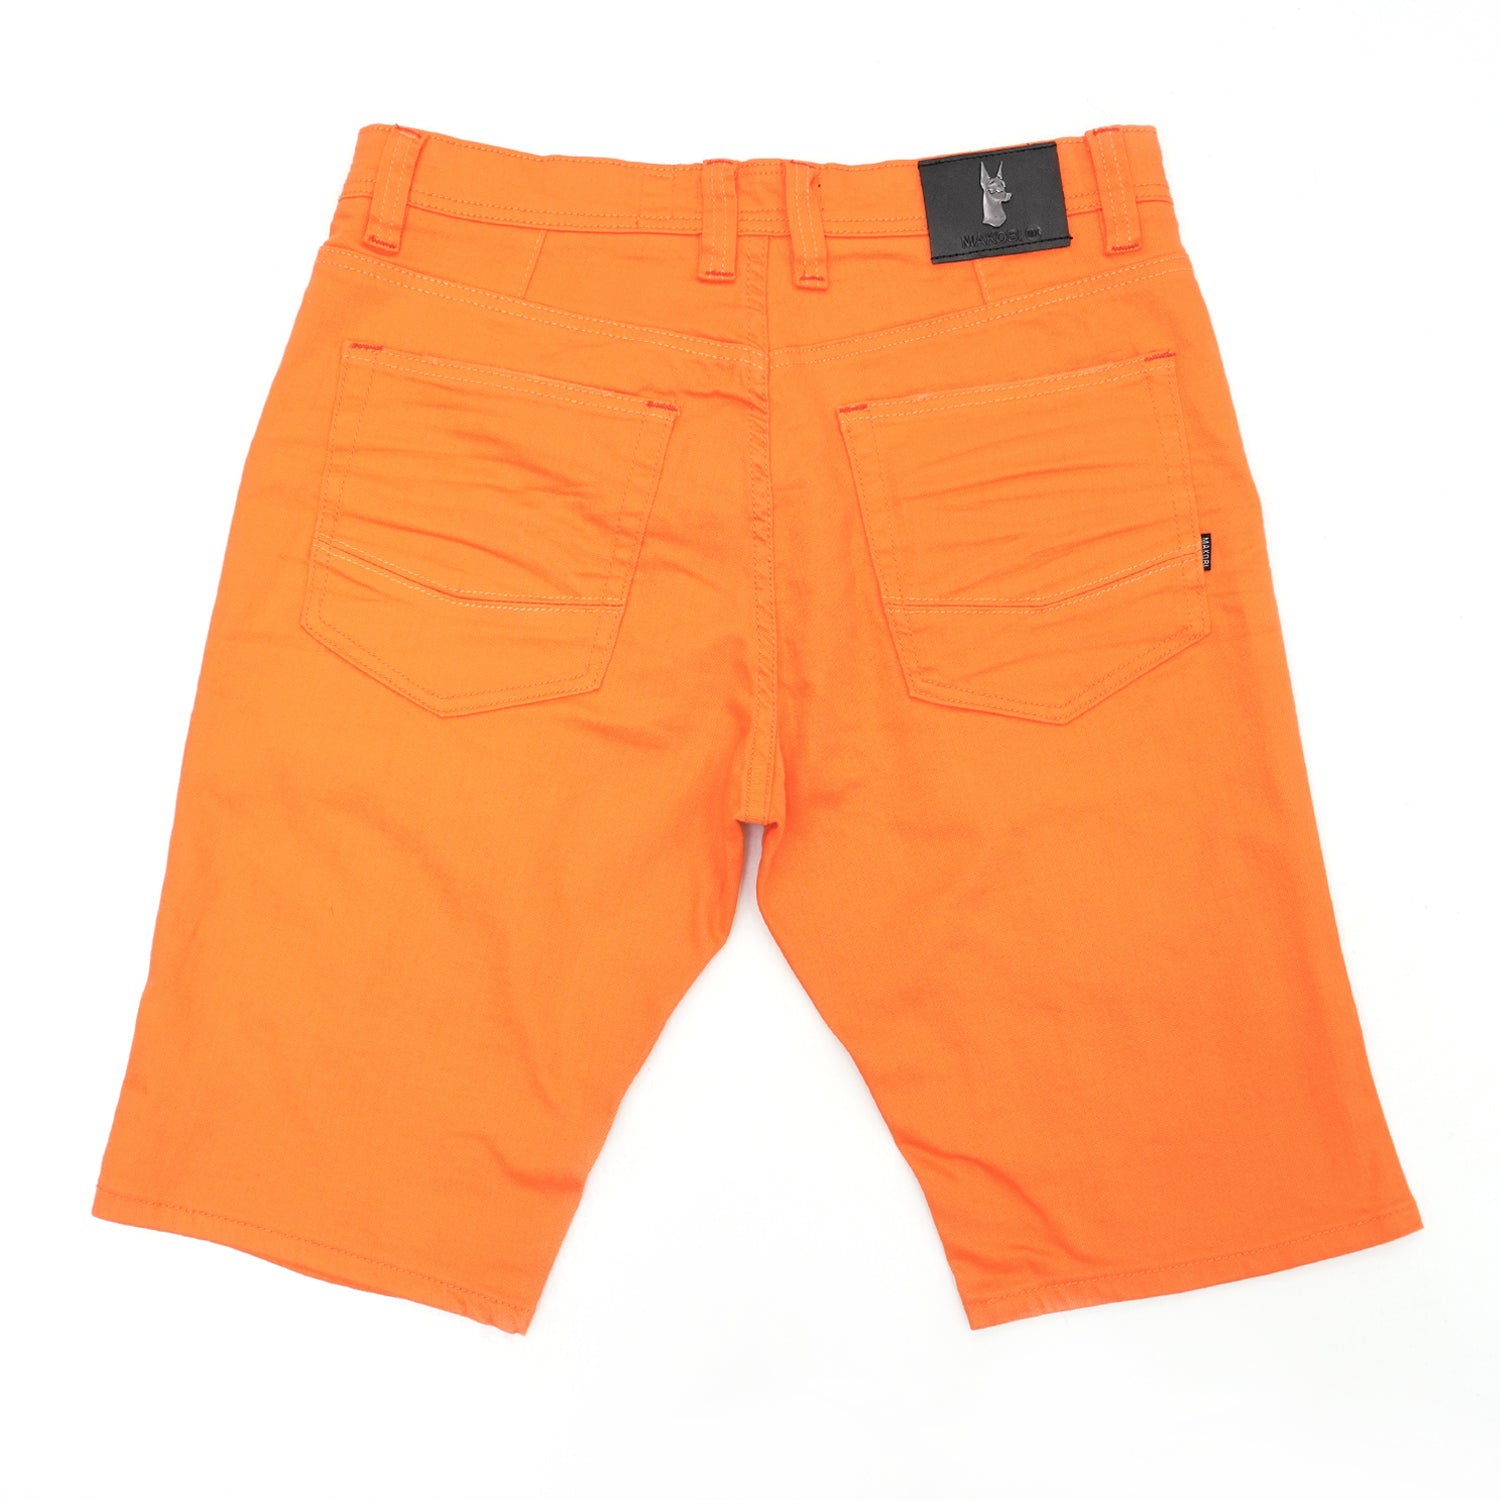 M971 Jordanelle Twill Shorts - Orange